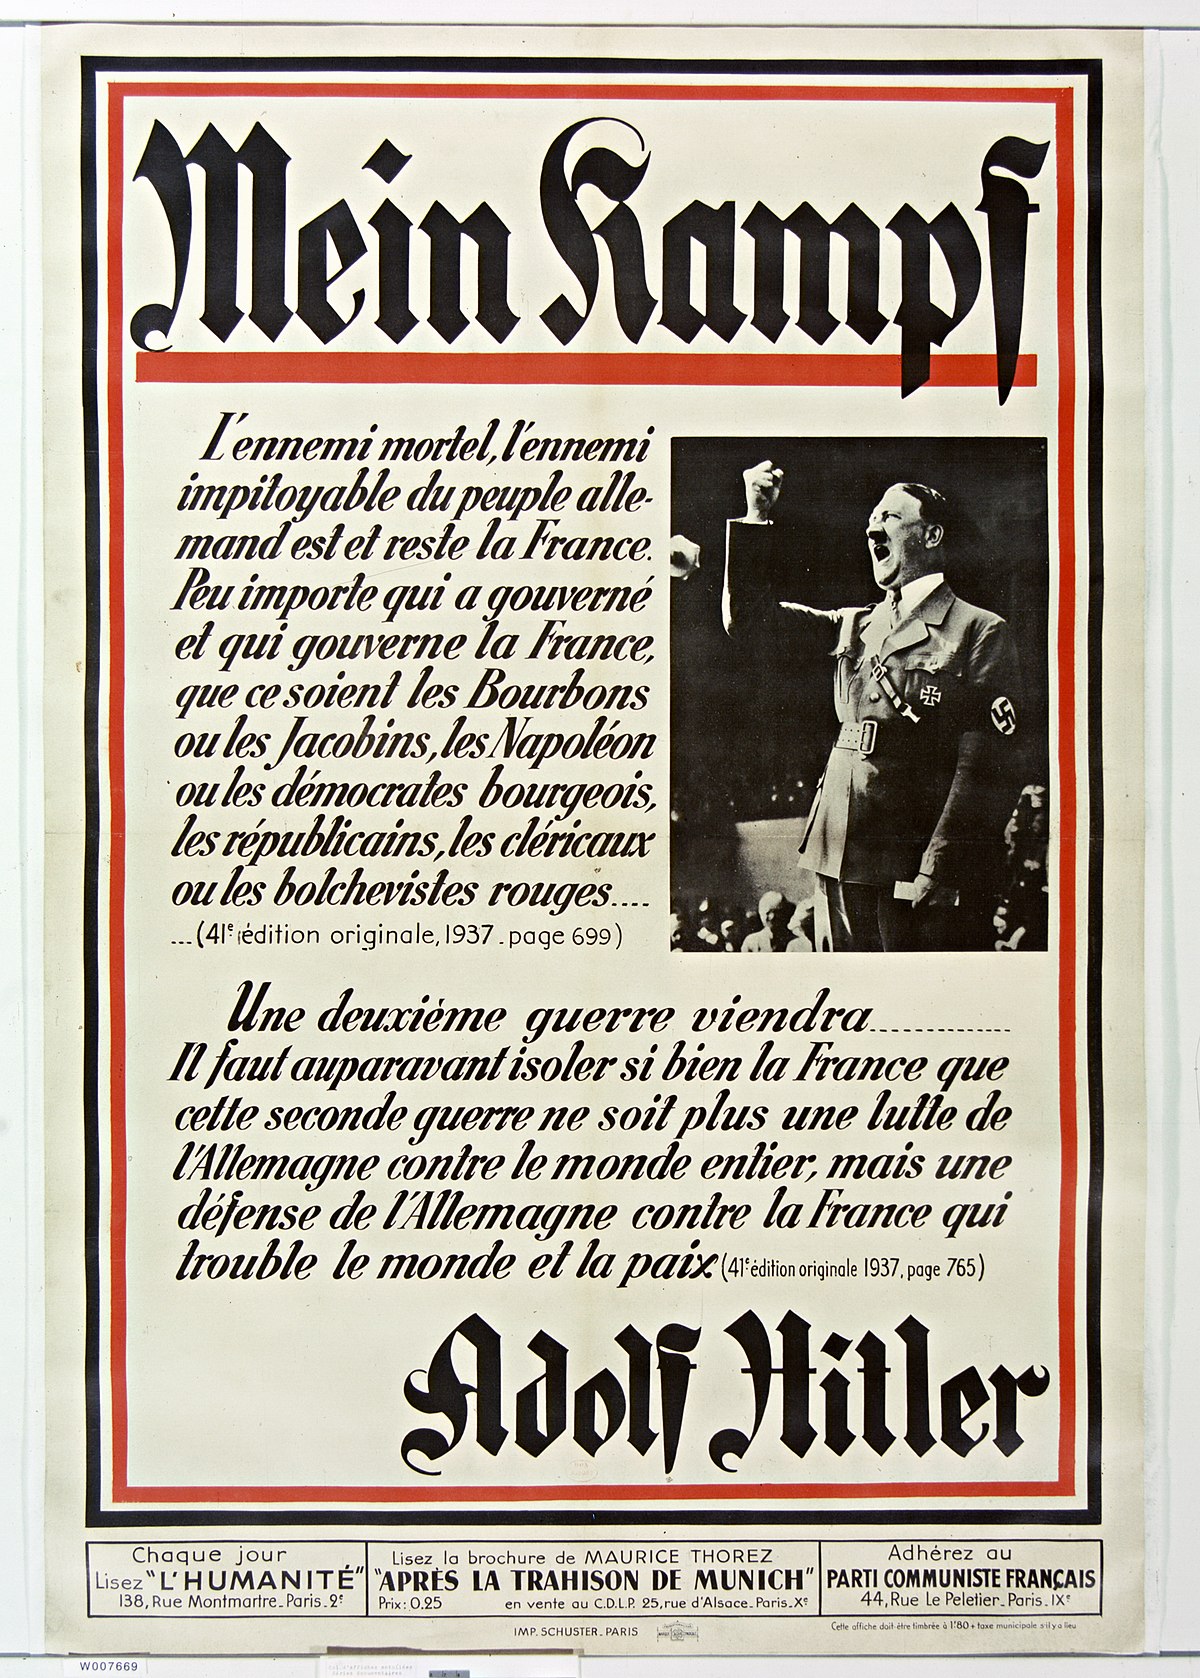 Political views of Adolf Hitler - Wikipedia